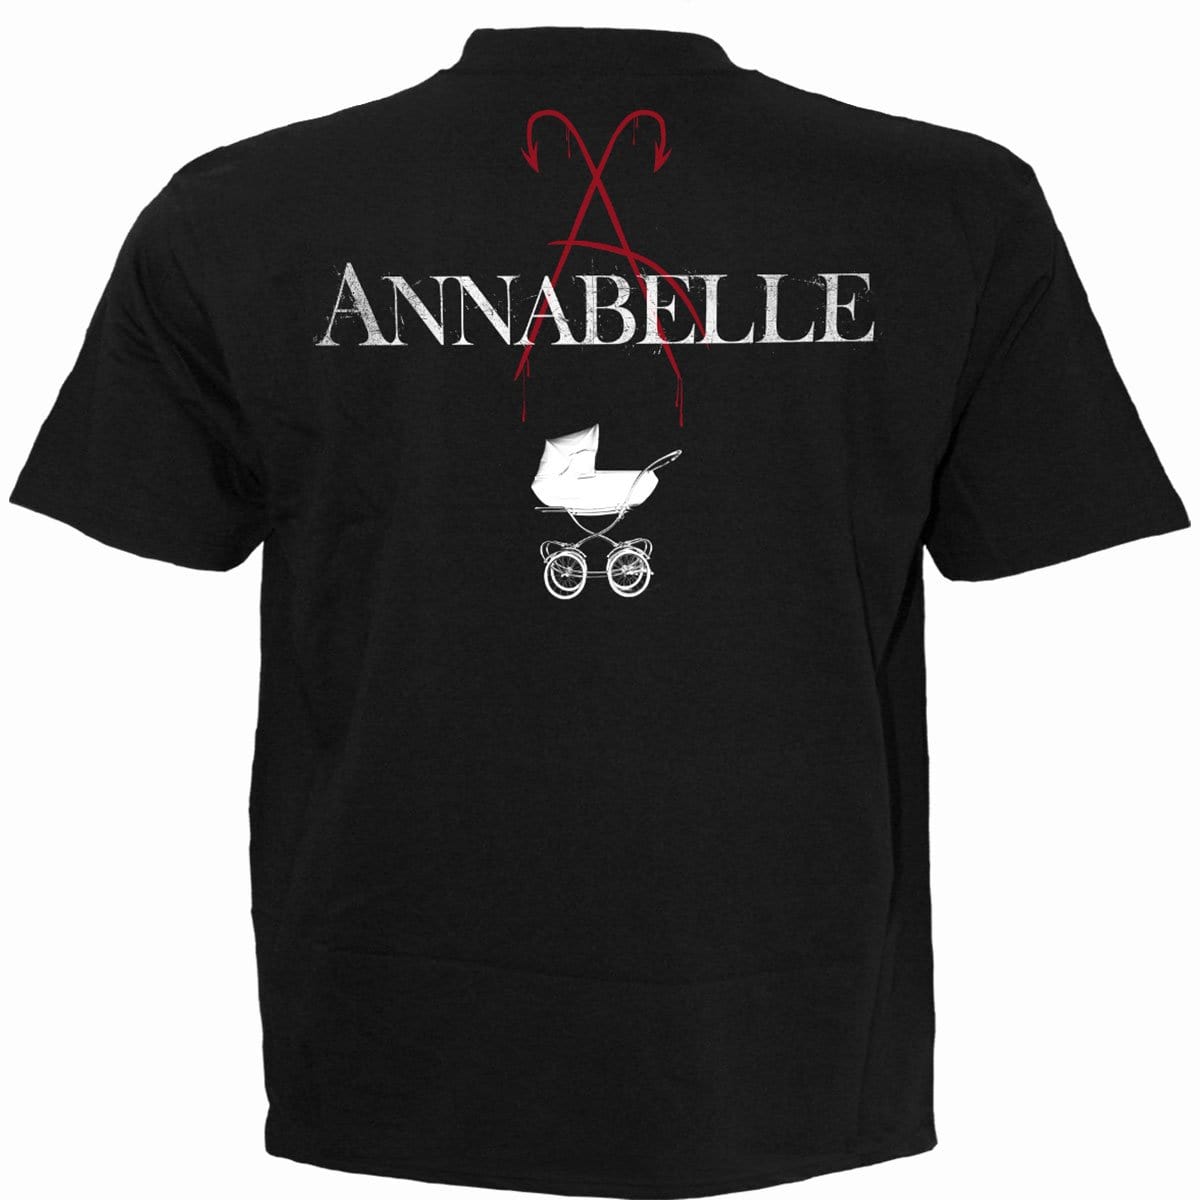 ANNABELLE - FOUND YOU - T-Shirt Black - Spiral USA